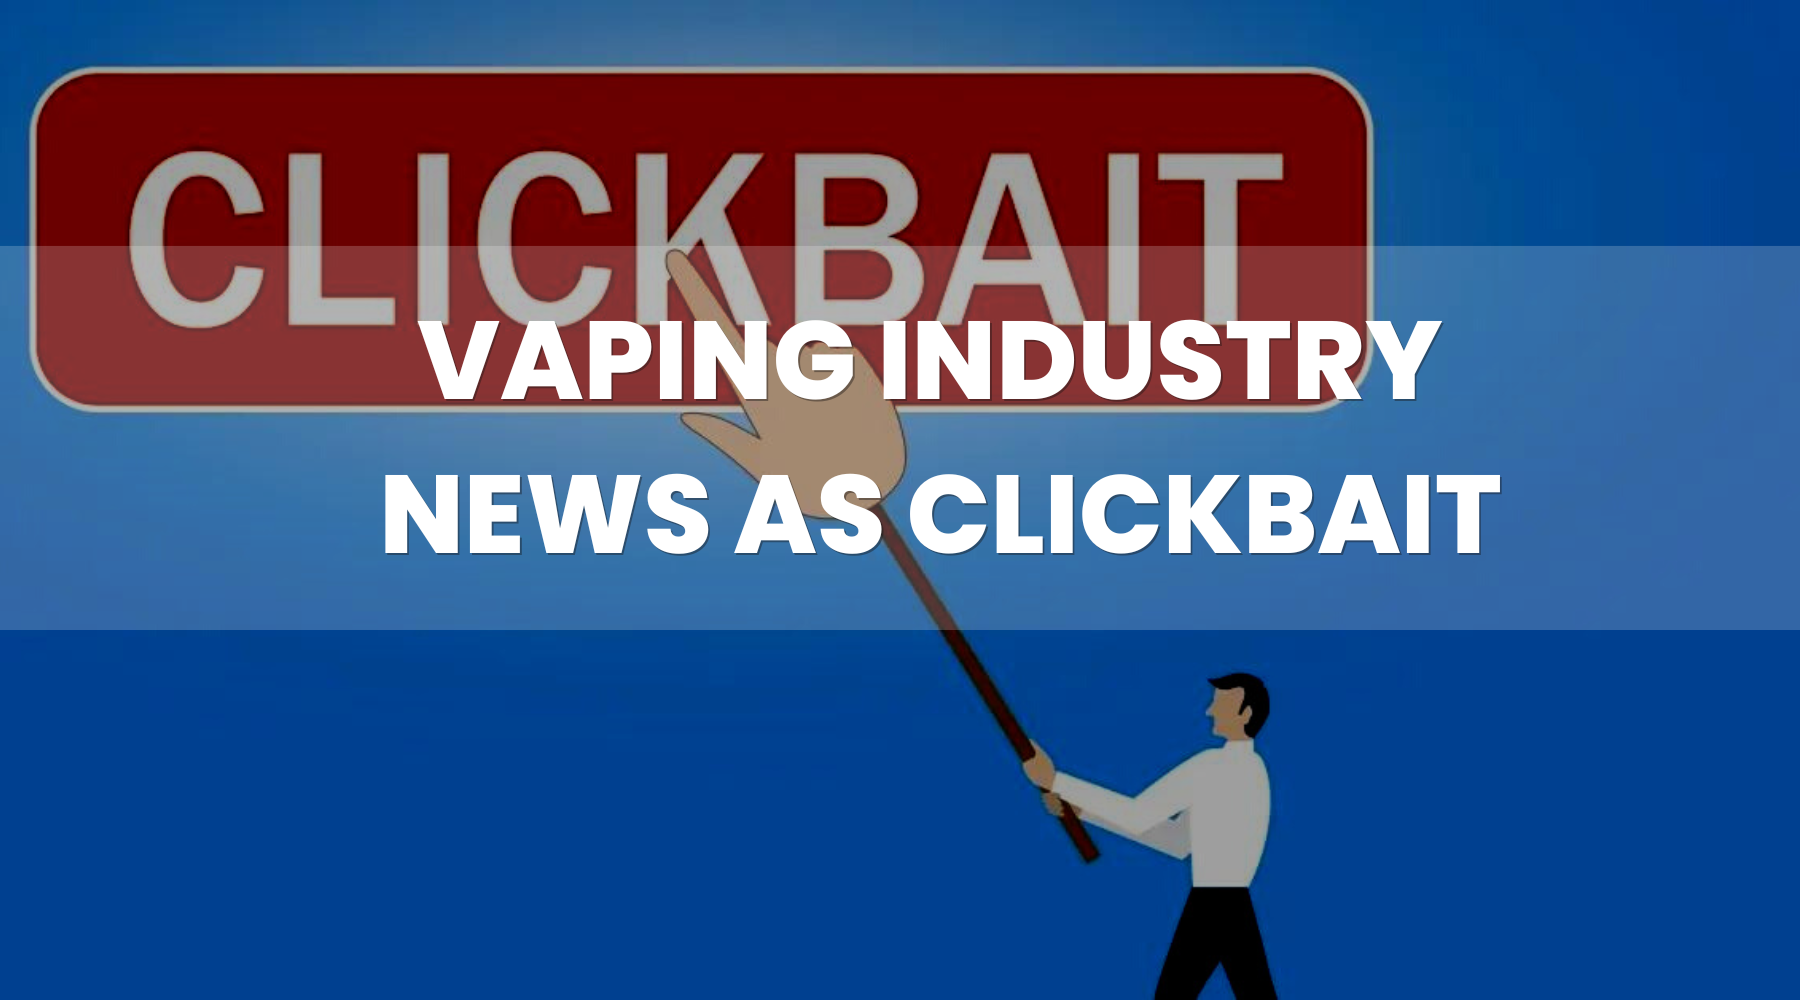 Vaping Industry News As Clickbait